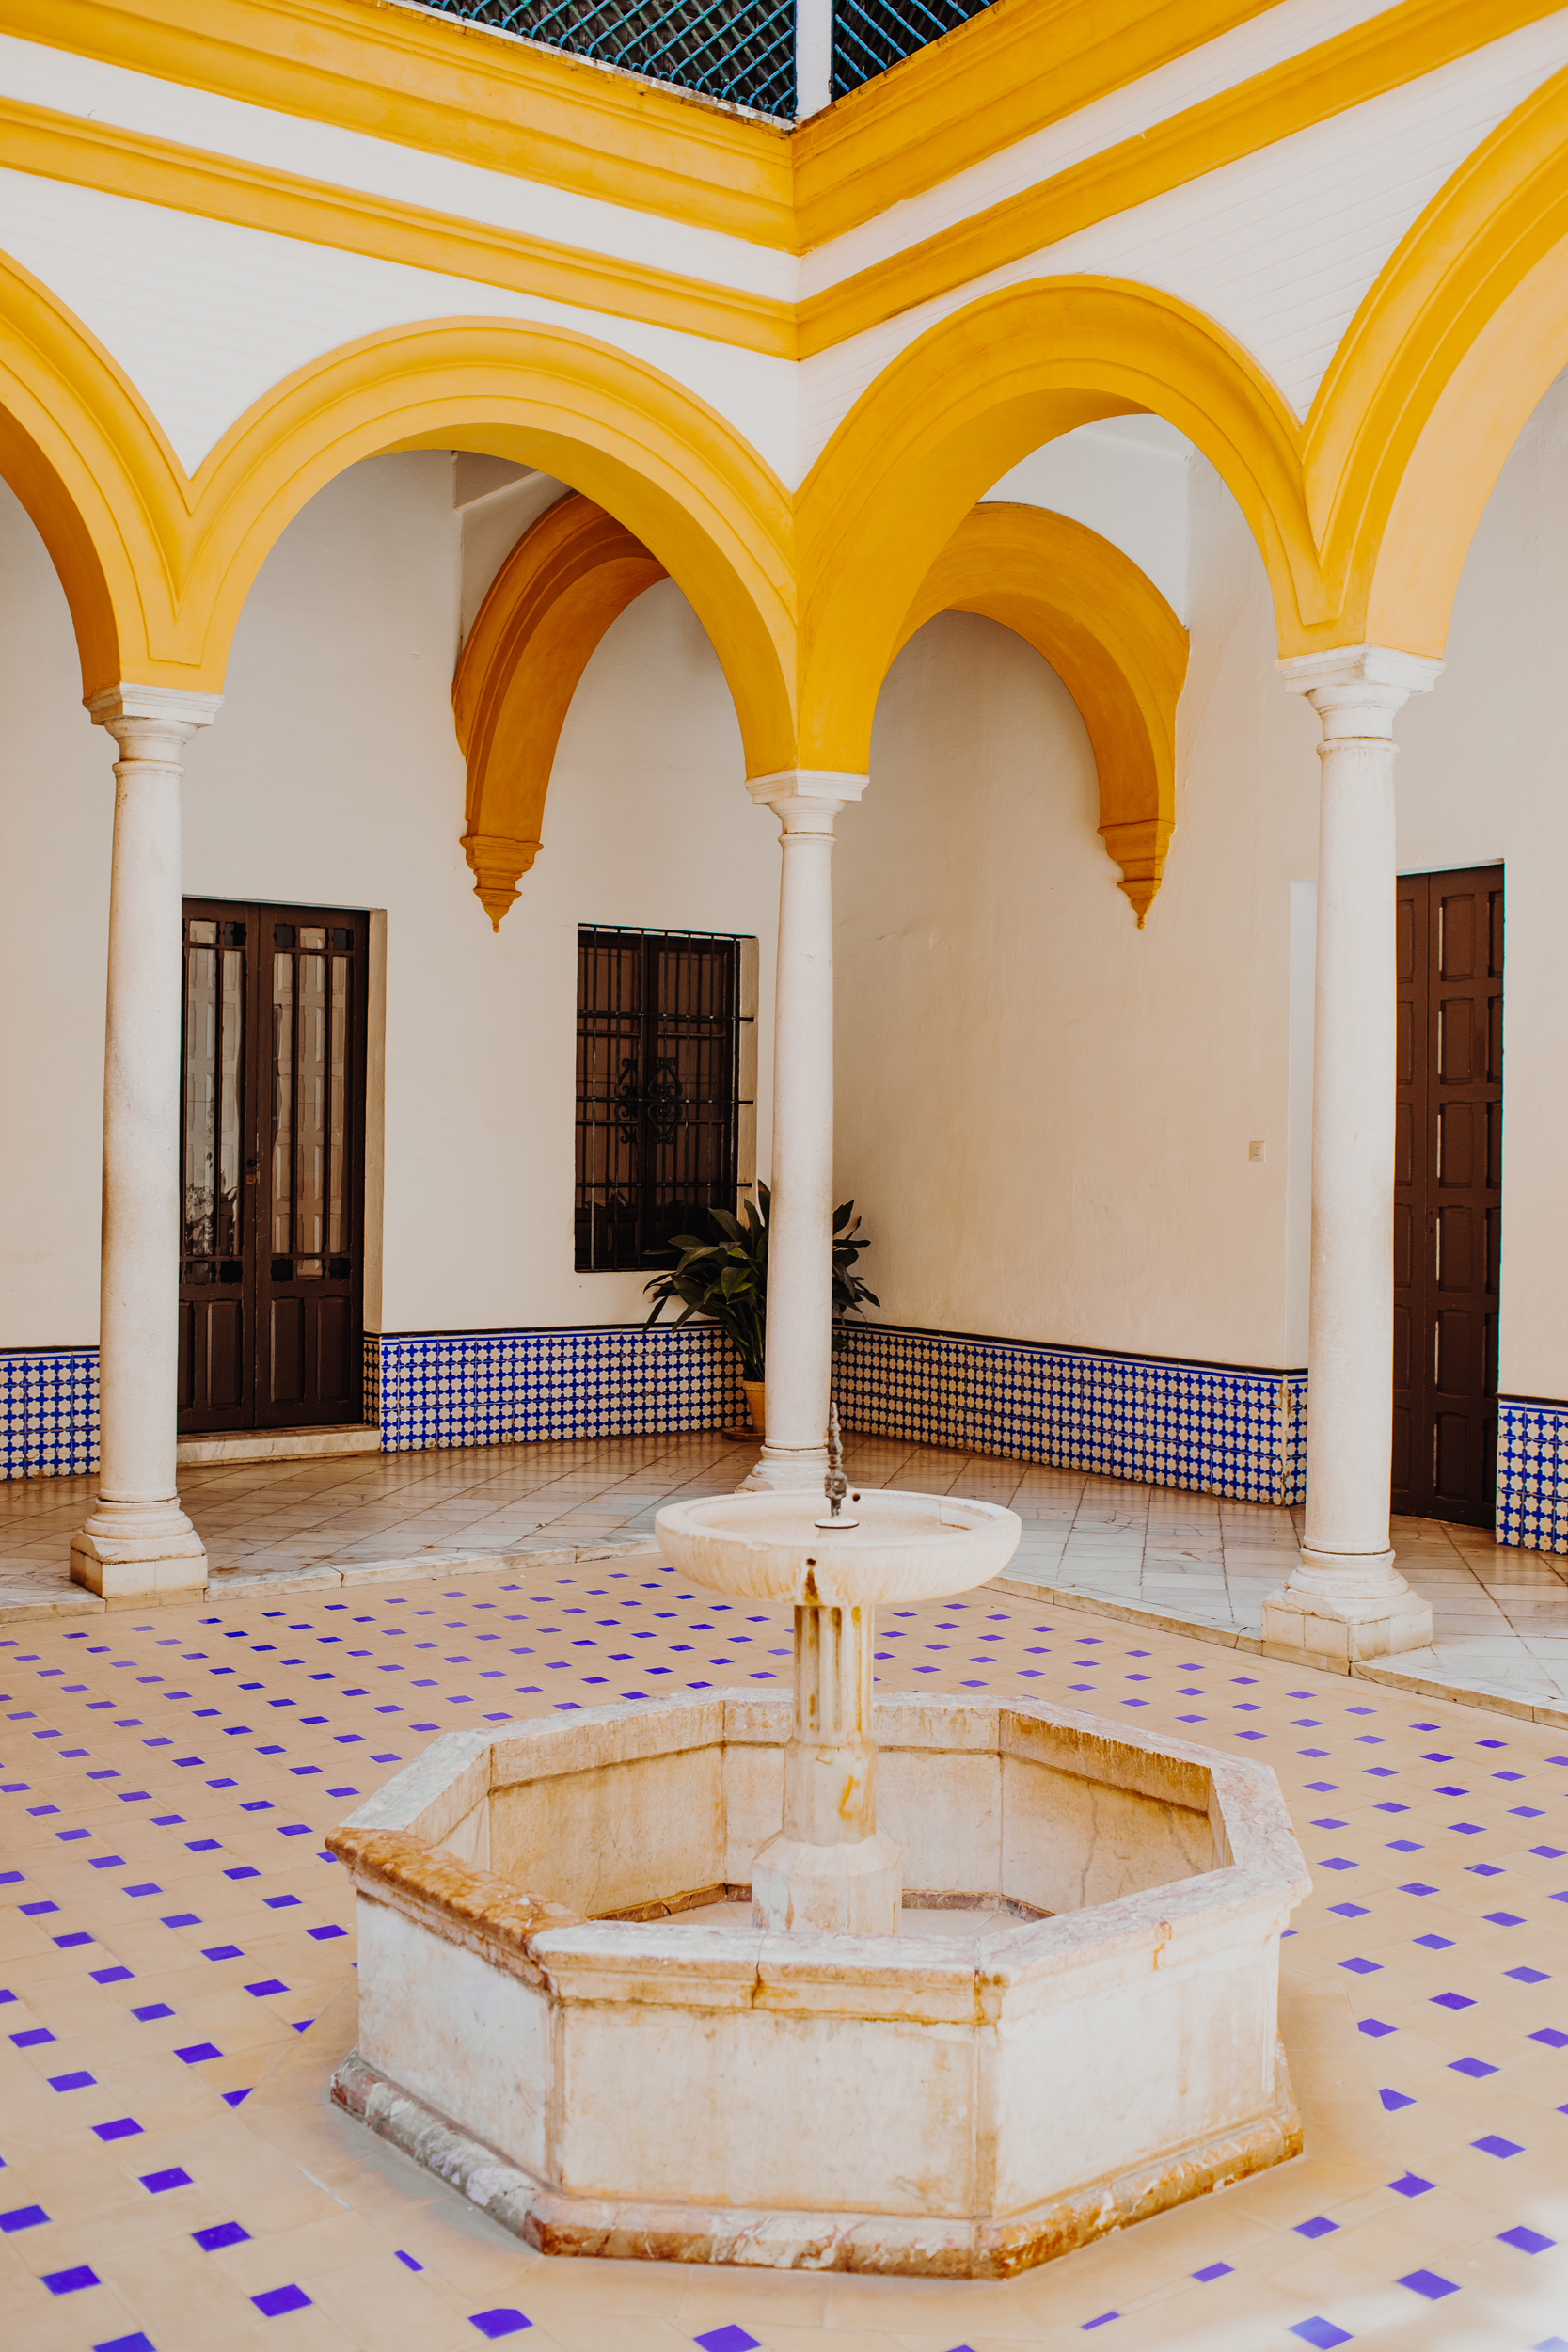 colorful-courtyard-royal-alcazar-seville-spain